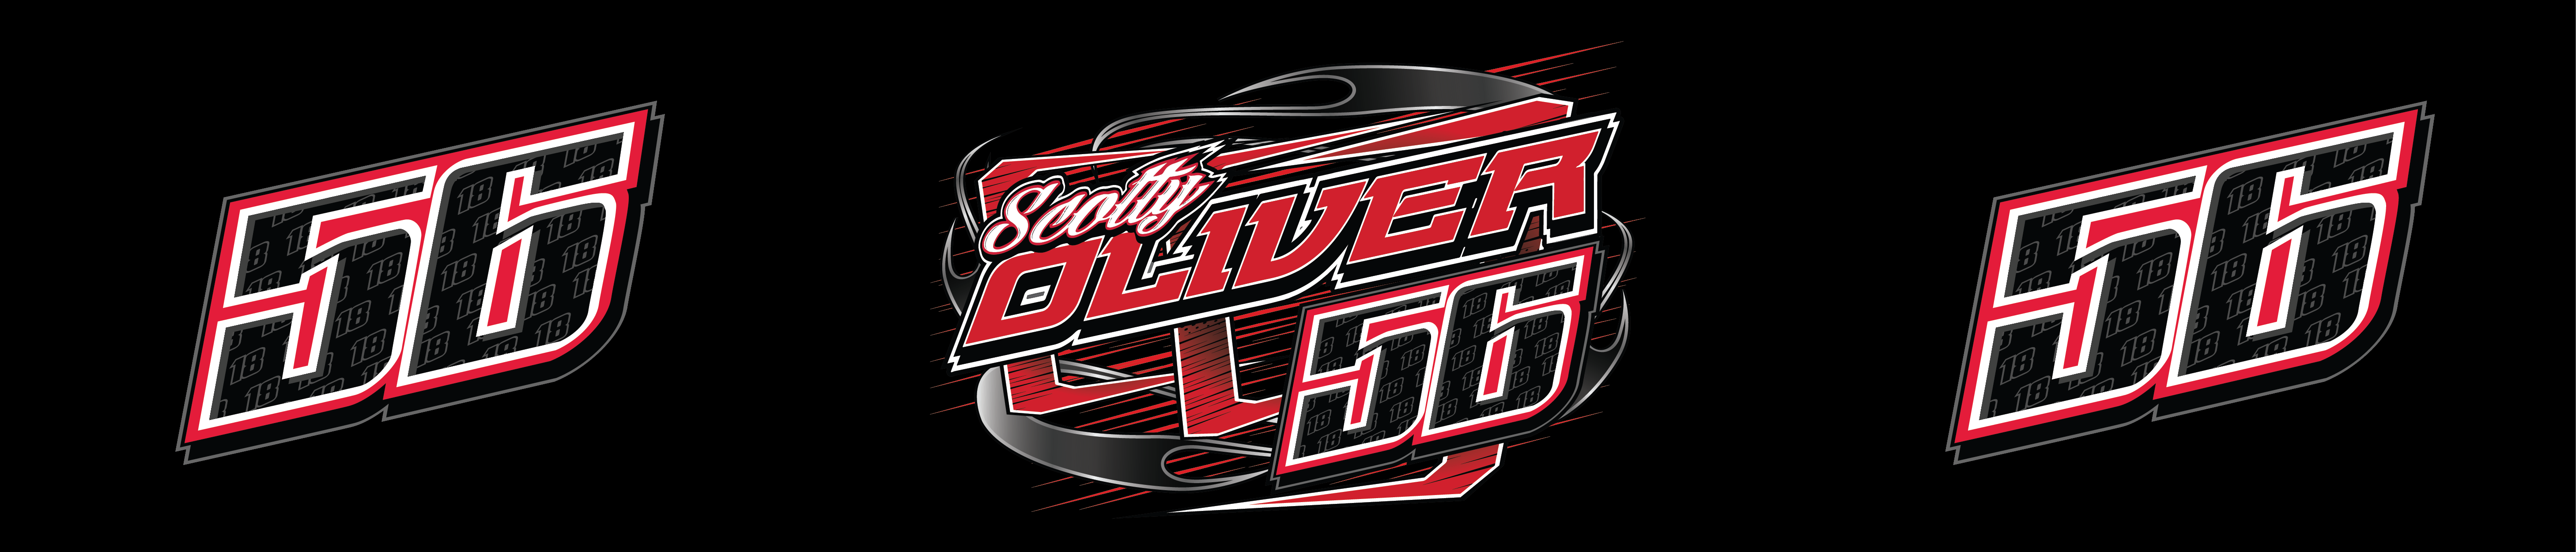 Scott Oliver Racing